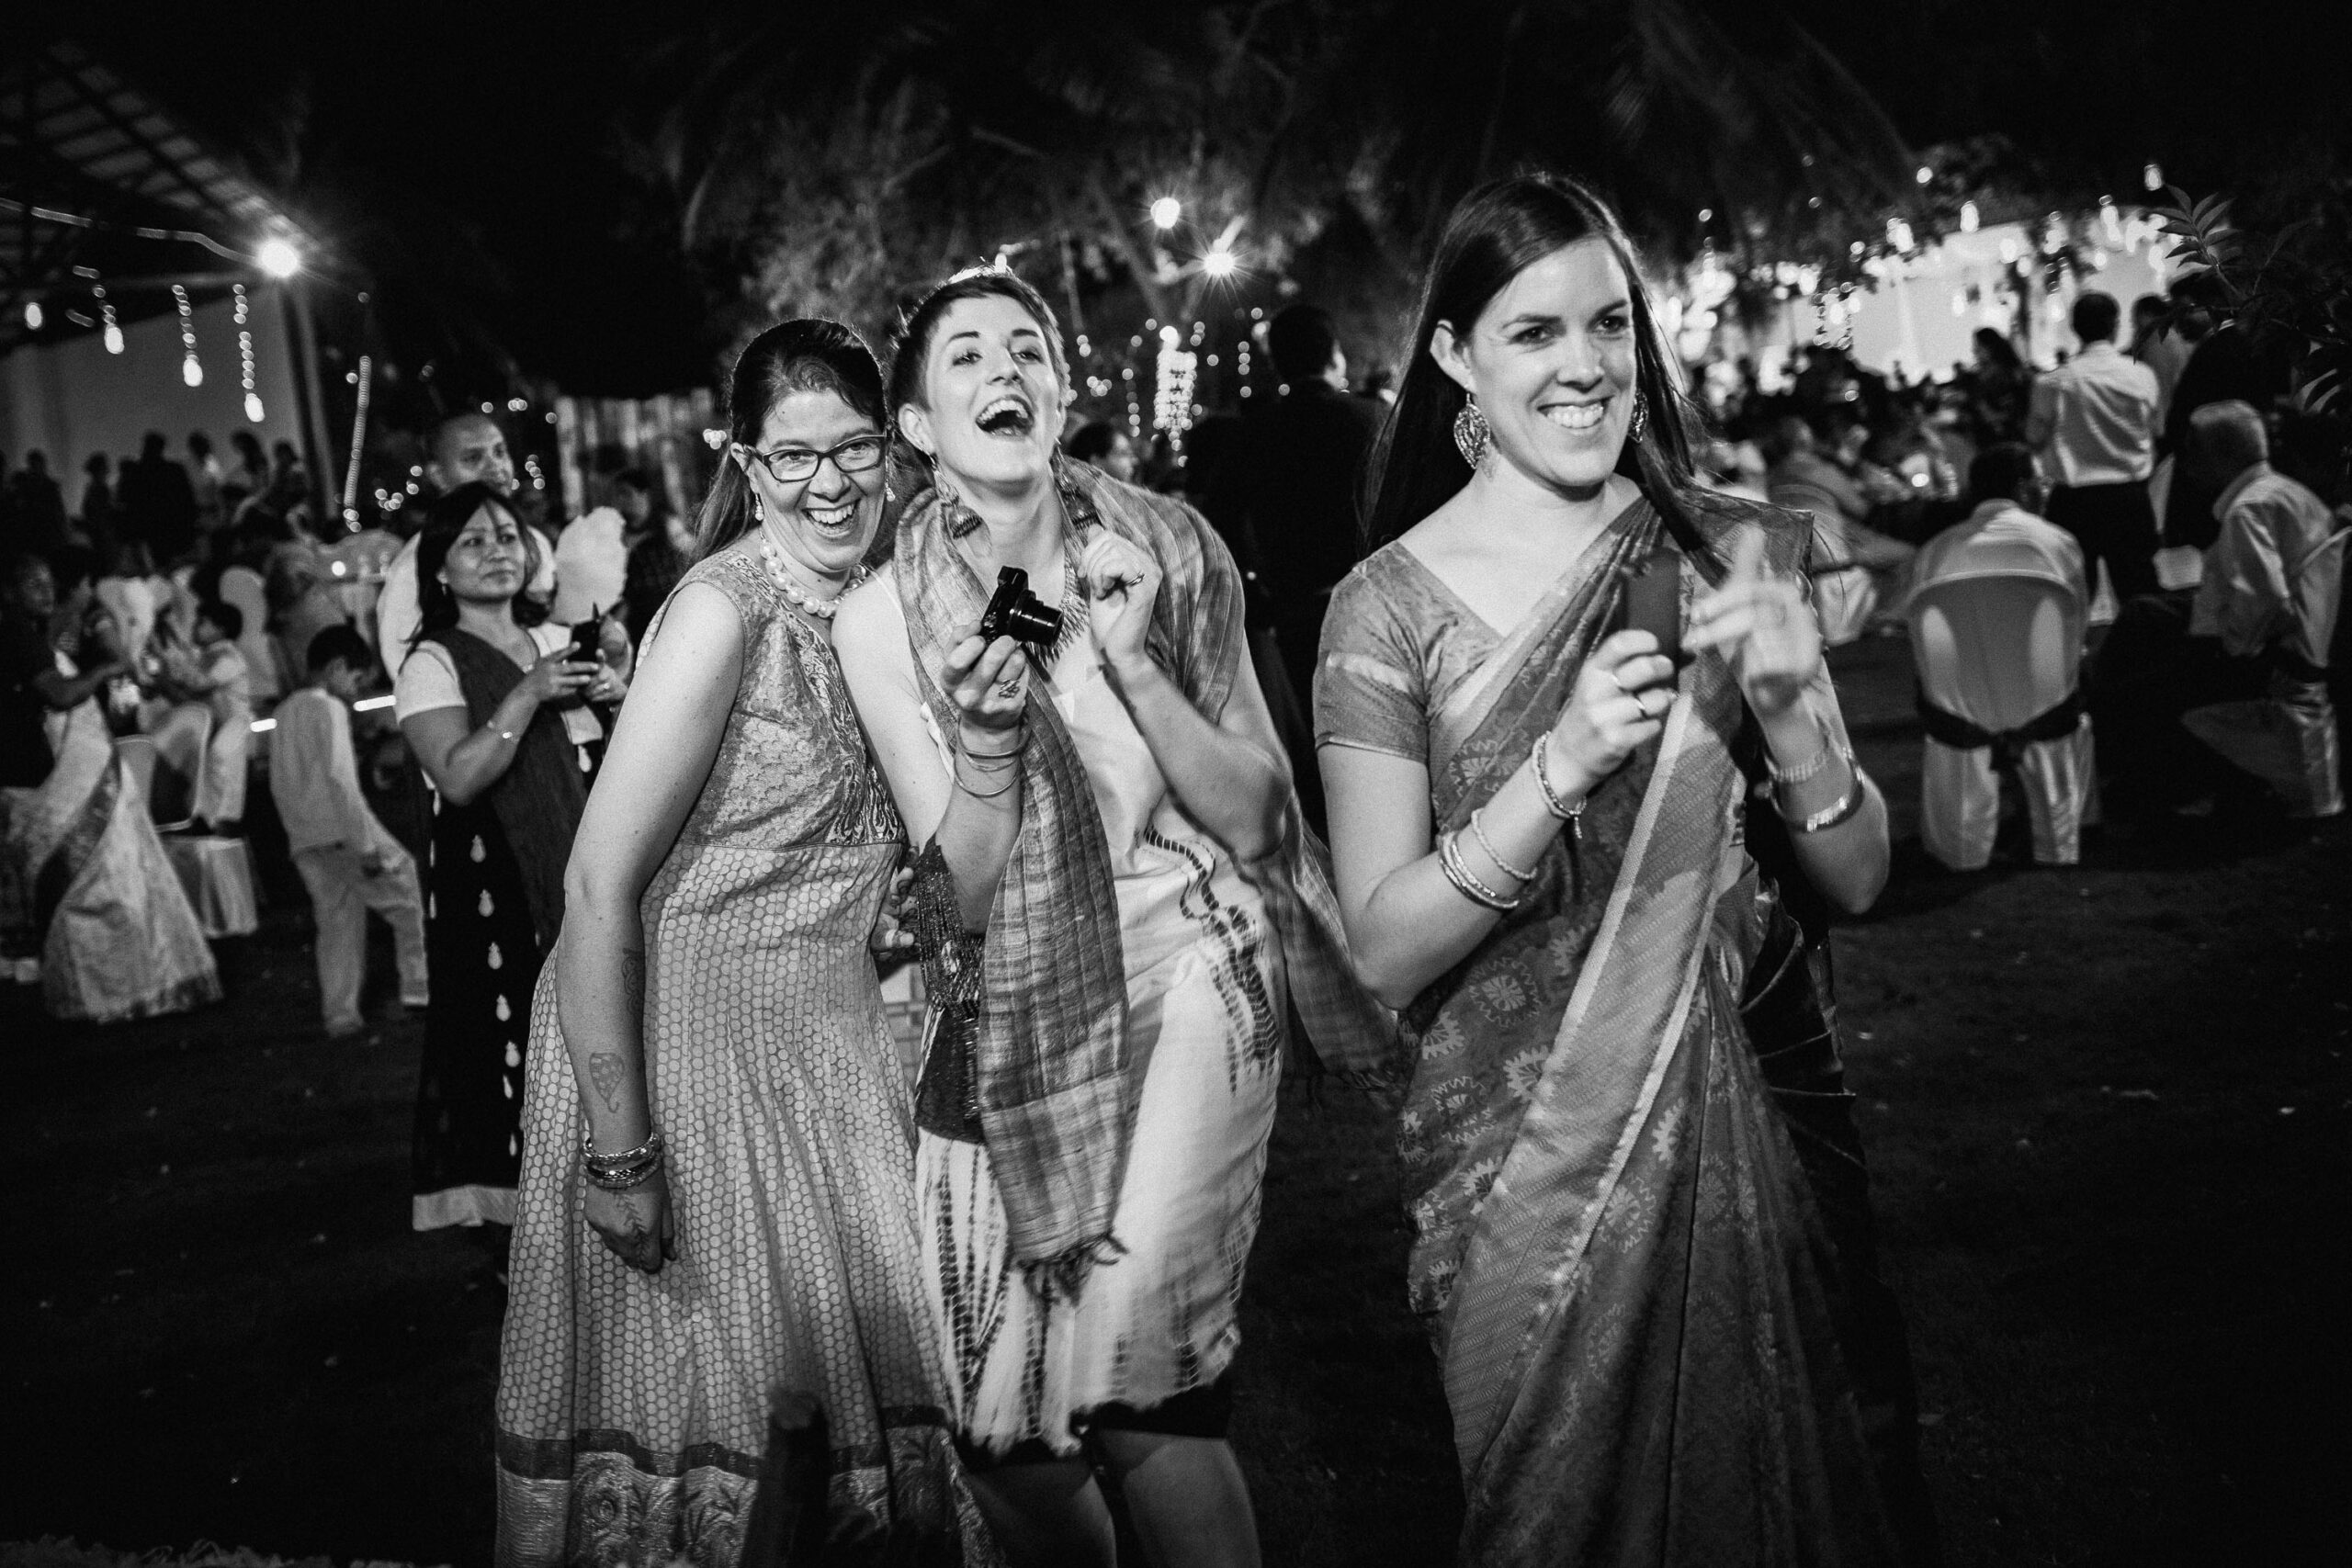 christian wedding photography bangalore asha stevie dropdstudio